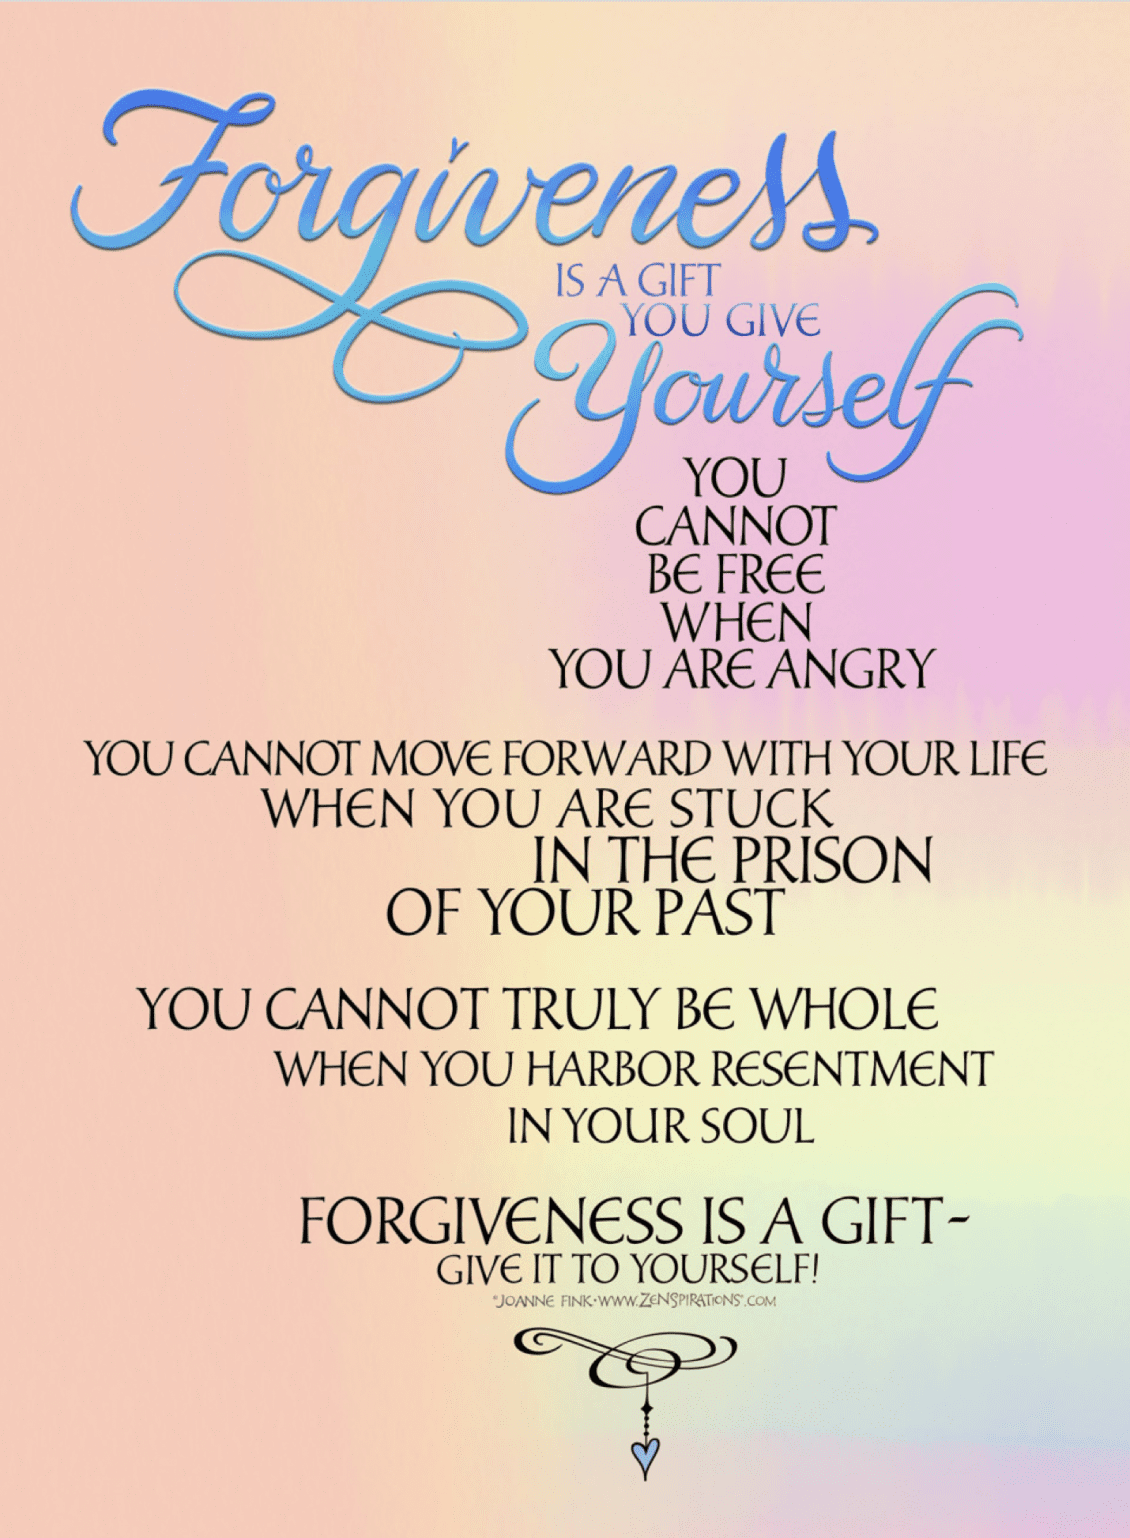 The Gift of Forgiveness - Zenspirations